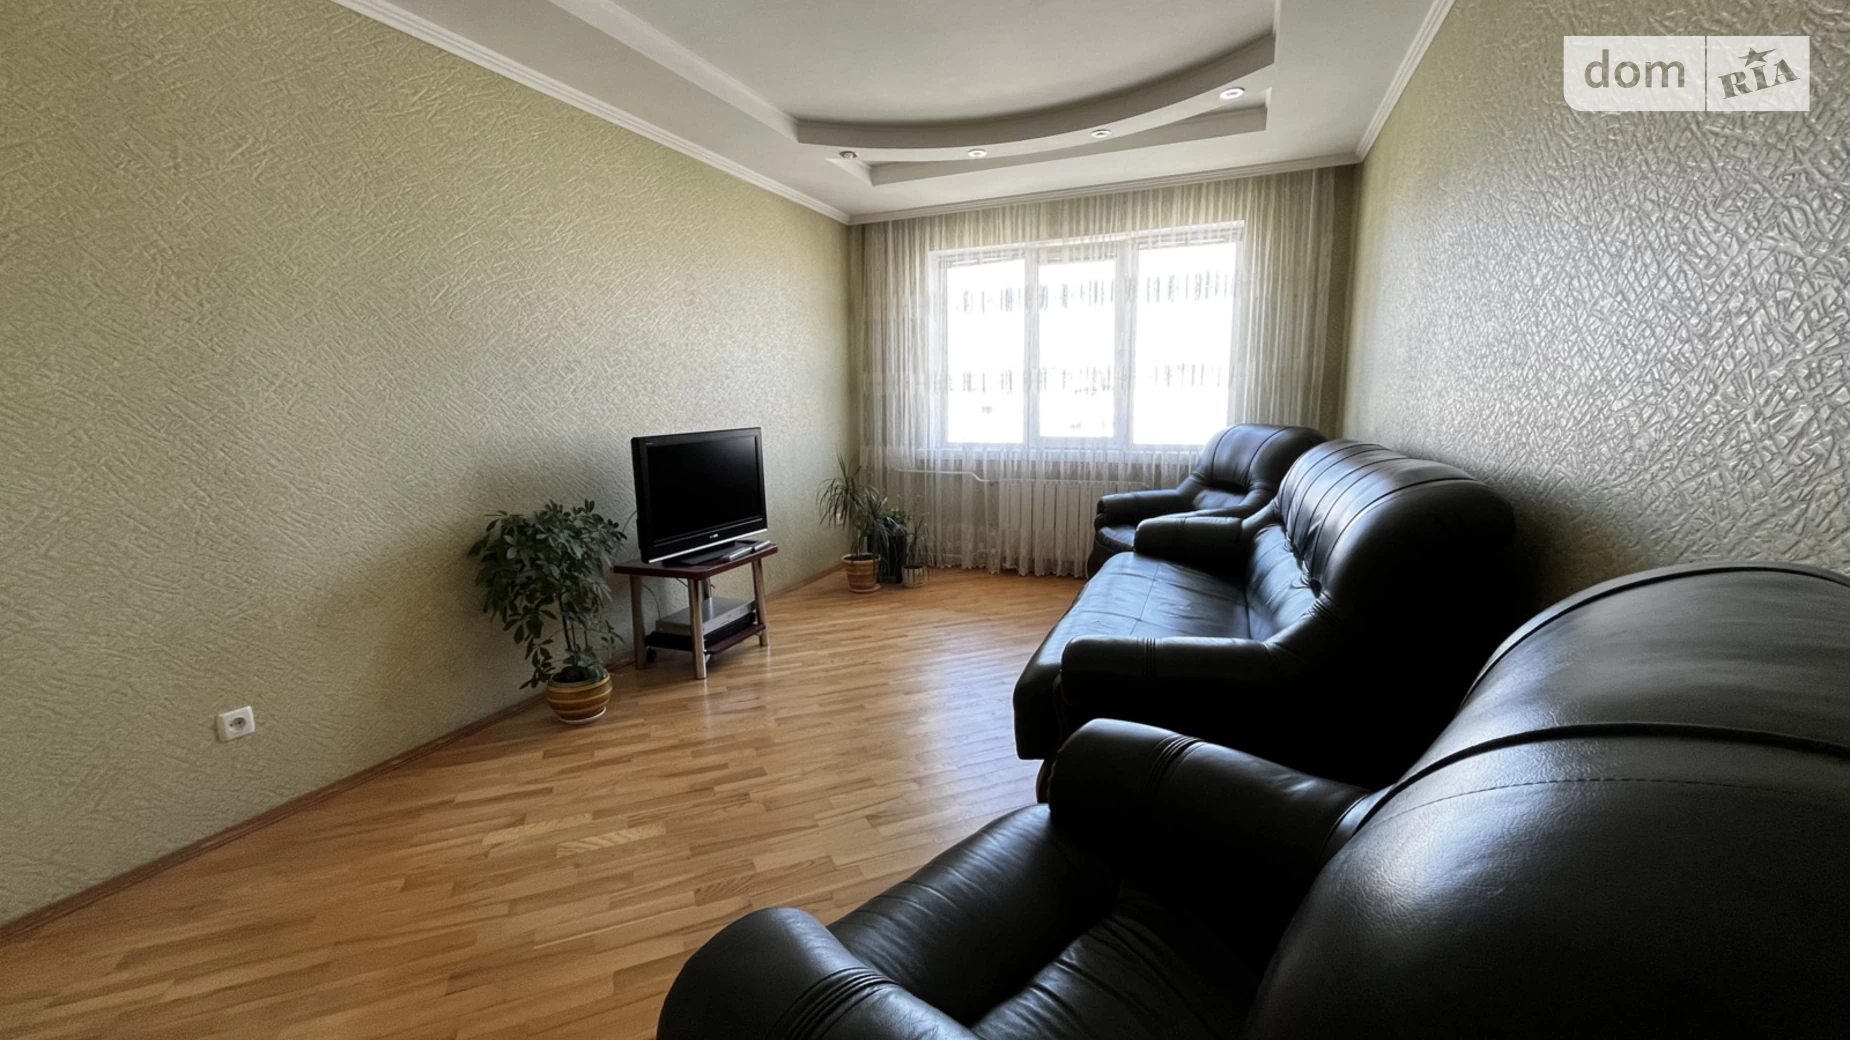 3-кімнатна квартира 65 кв. м у Луцьку, вул. Кравчука - фото 3